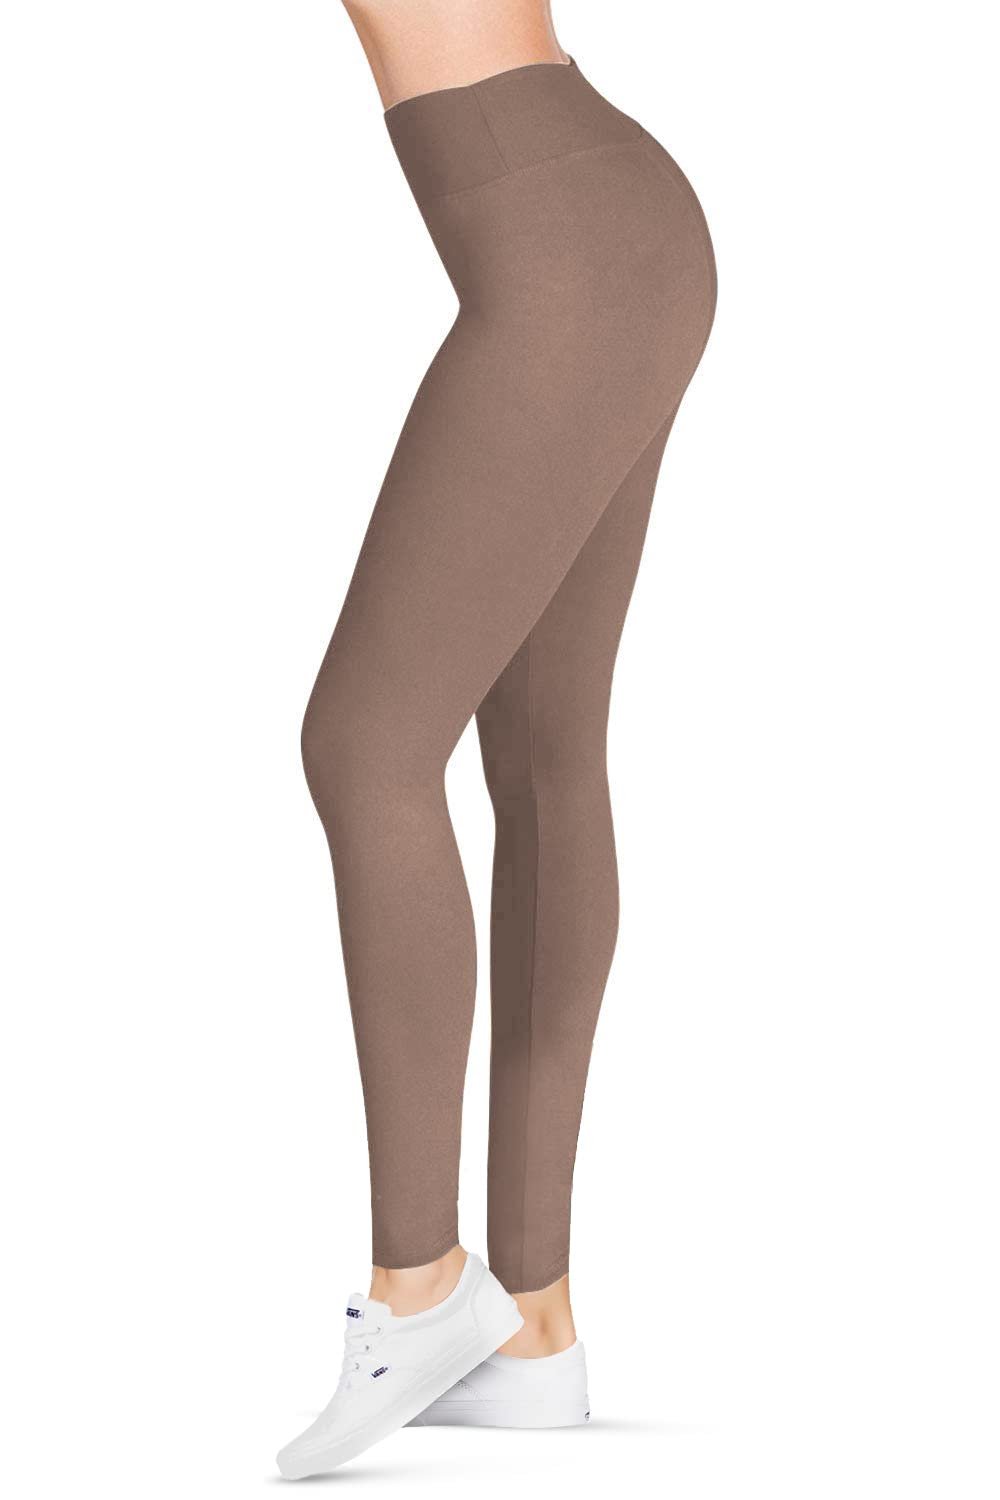 SATINA Charcoal High Waist Leggings w/ Pockets - Regular & Plus Size 